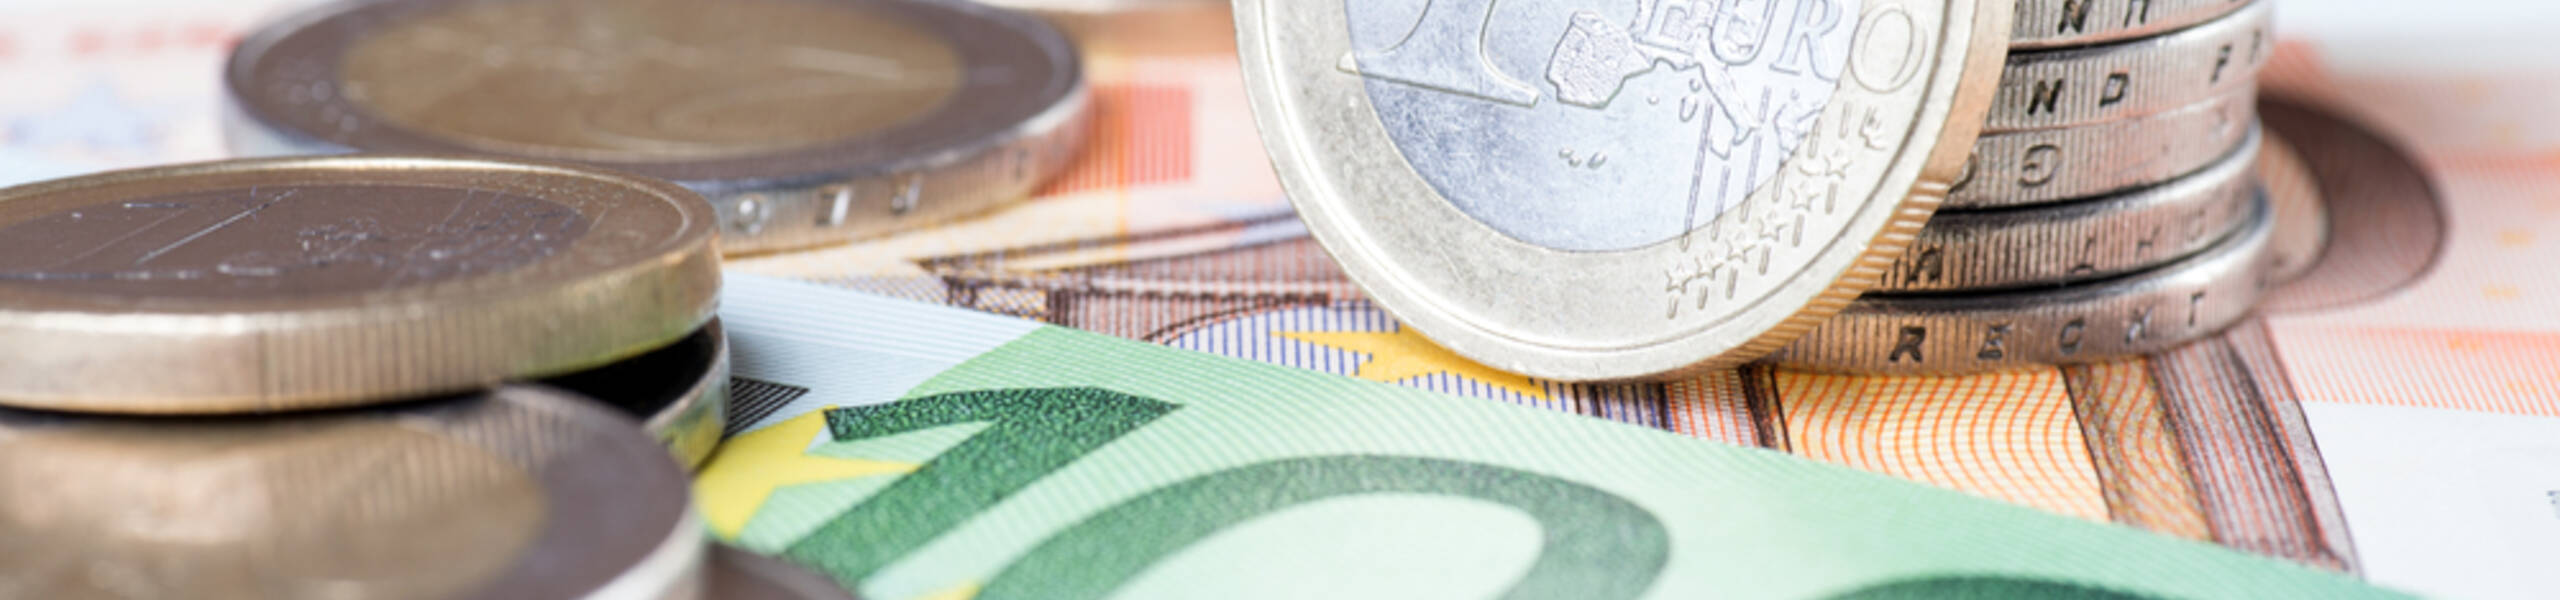 تحليل زوج اليورو دولار ليوم 5-6-2020